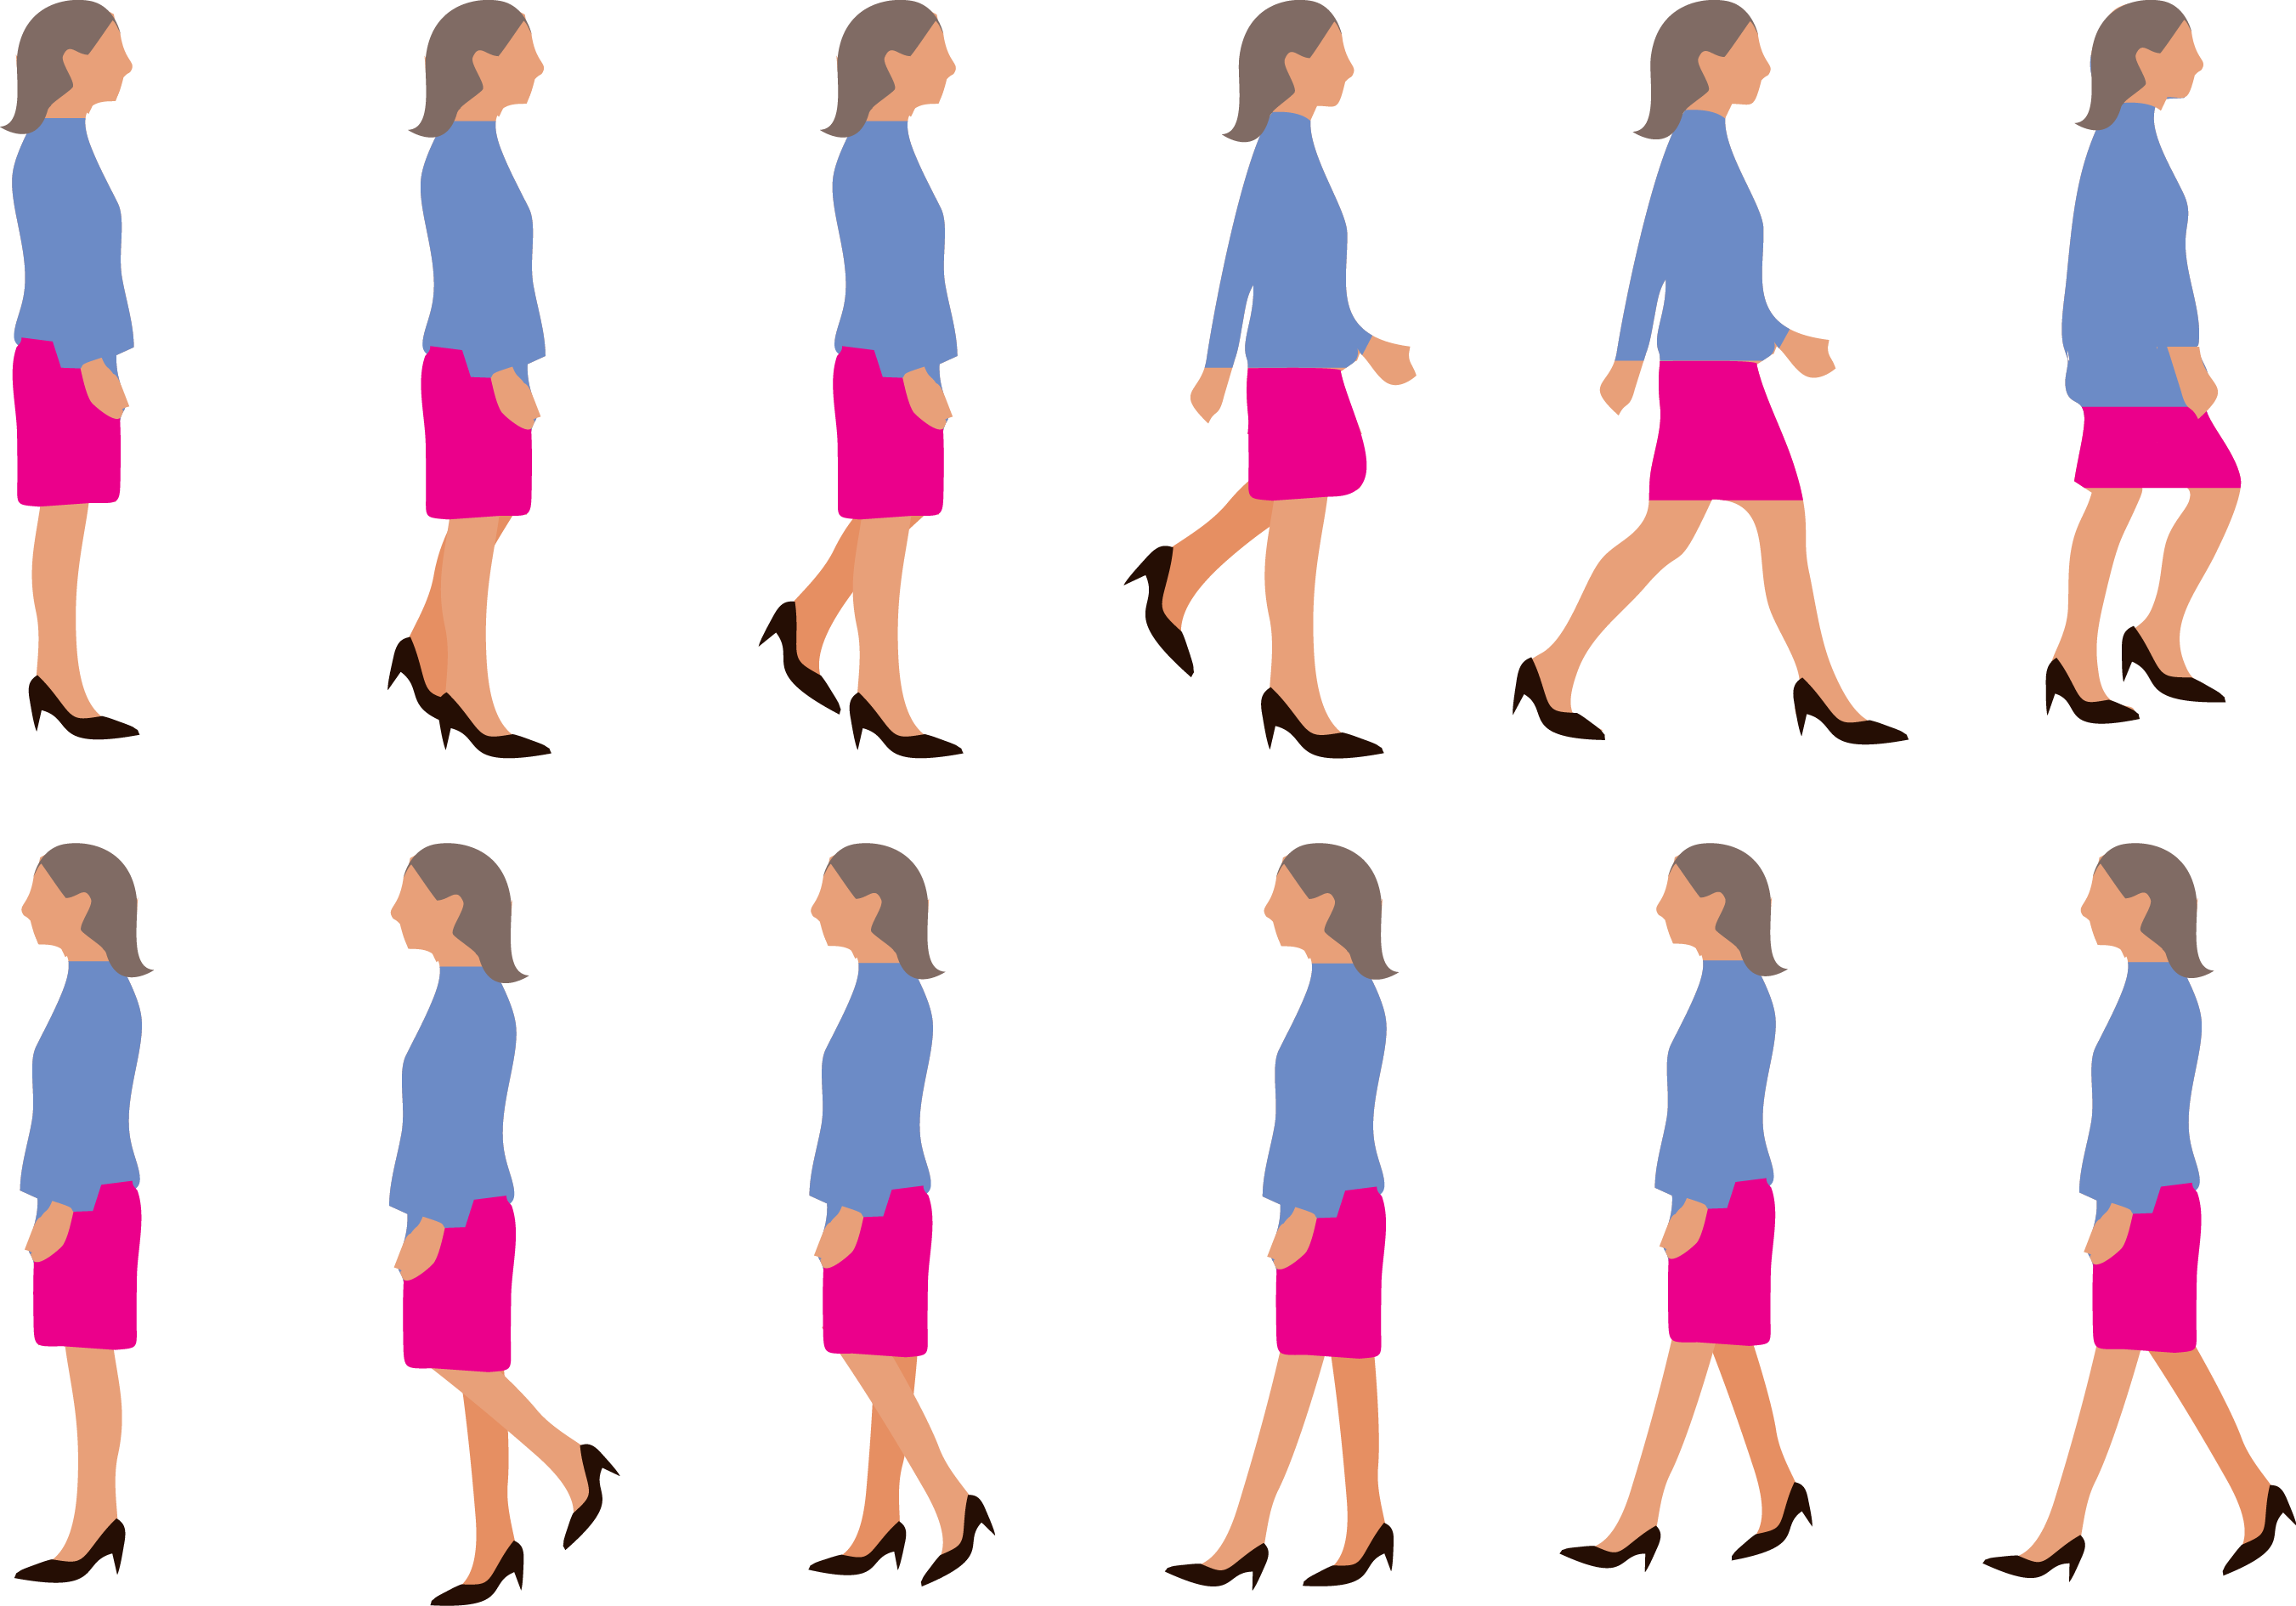 Walk Cycle Walking Woman - Women Walking Cycle Animation (2702x1890)